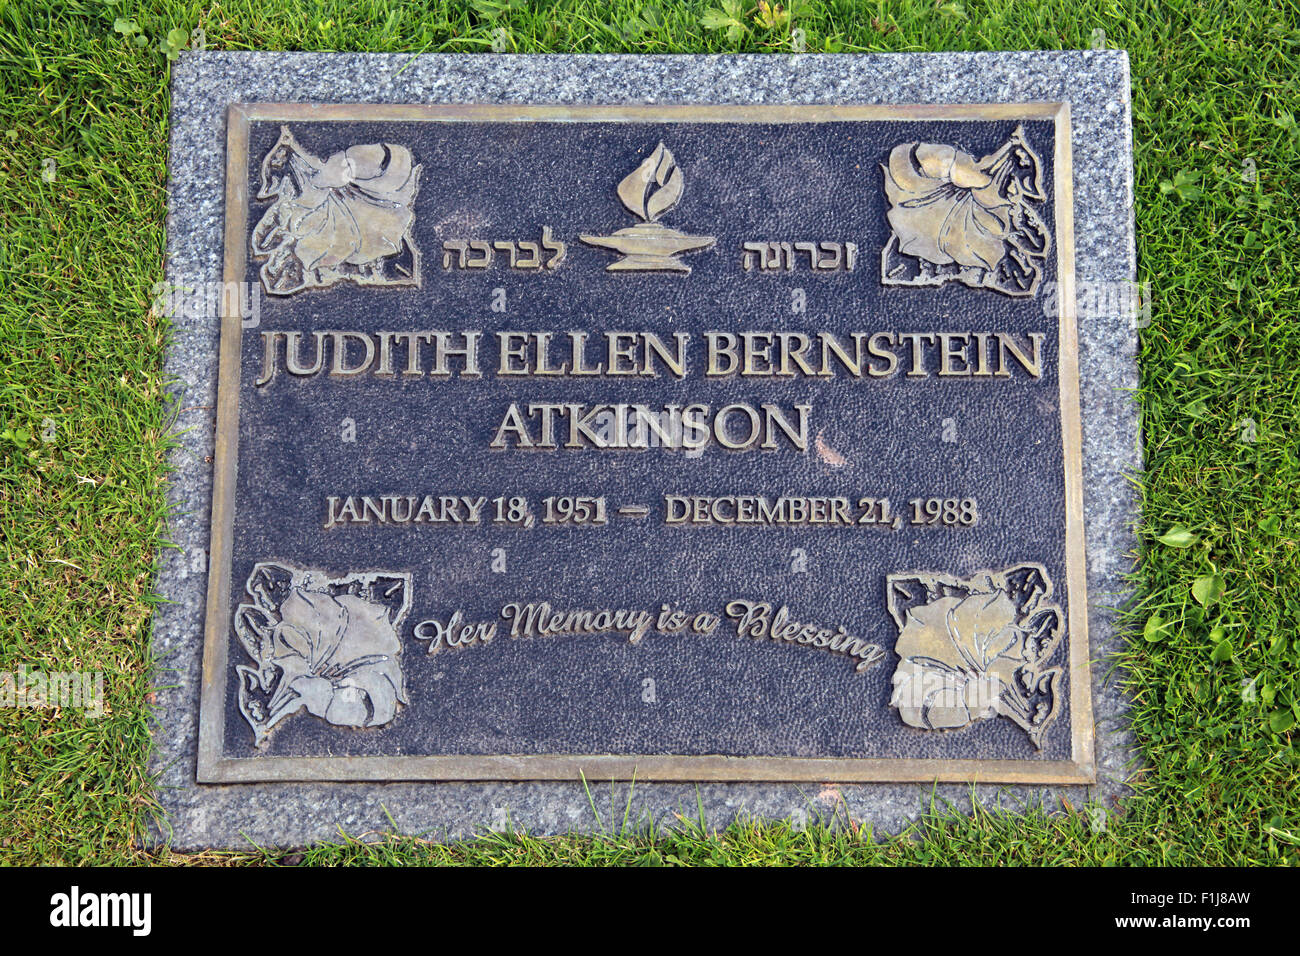 Lockerbie PanAm103 In Rememberance Memorial Judith Ellen Bernstein Atkinson of Jewish religion, Scotland Stock Photo